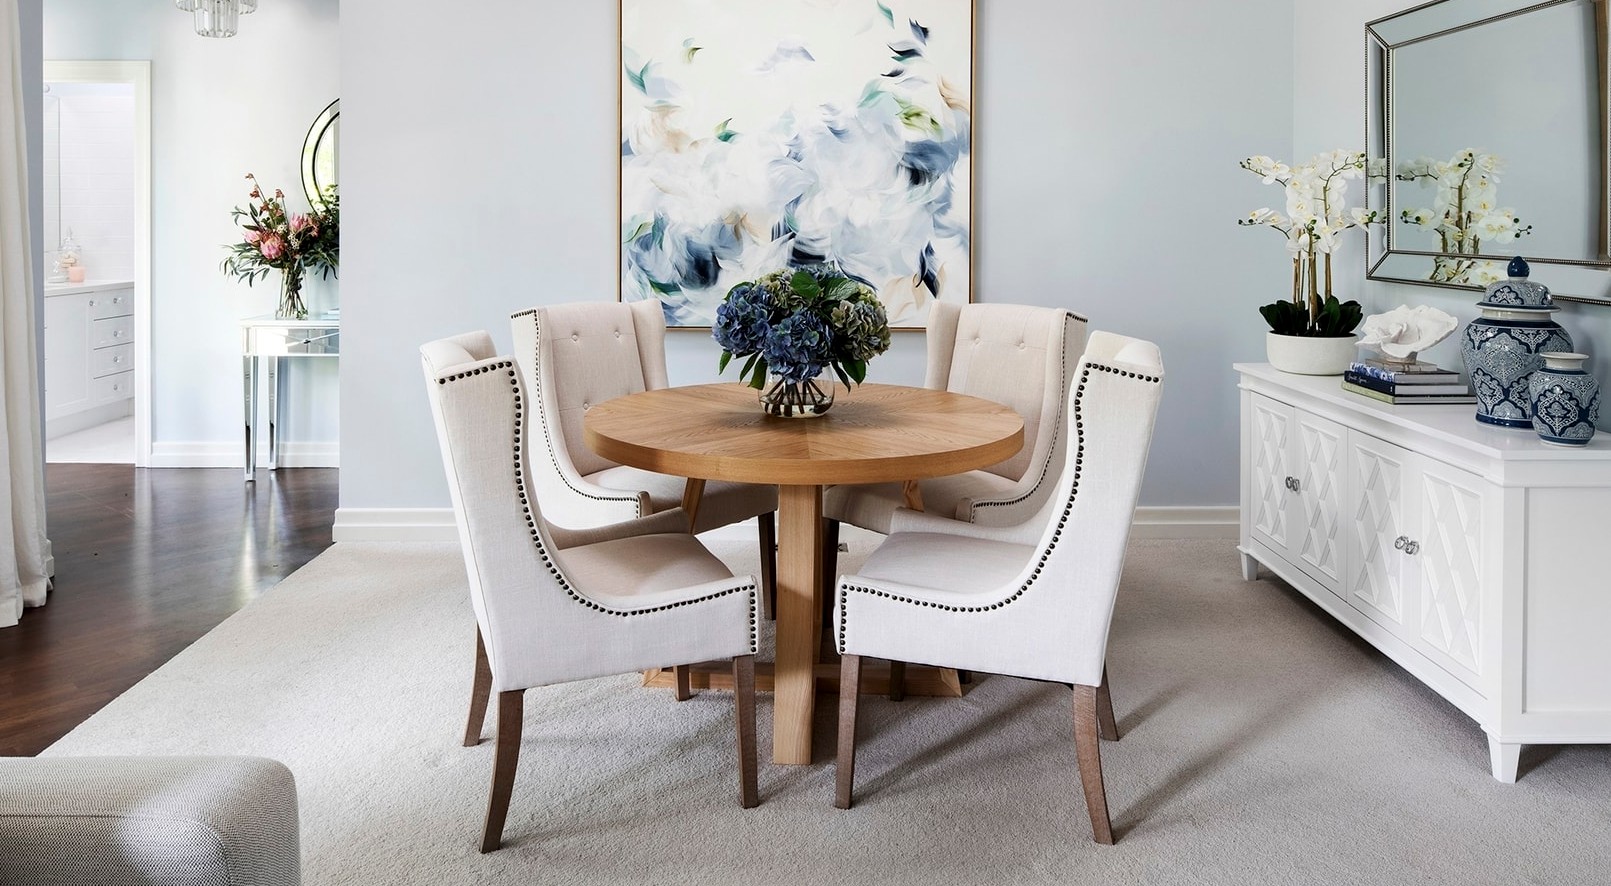 classic hamptons interior design dining room with chalie macrae art on light blue wall